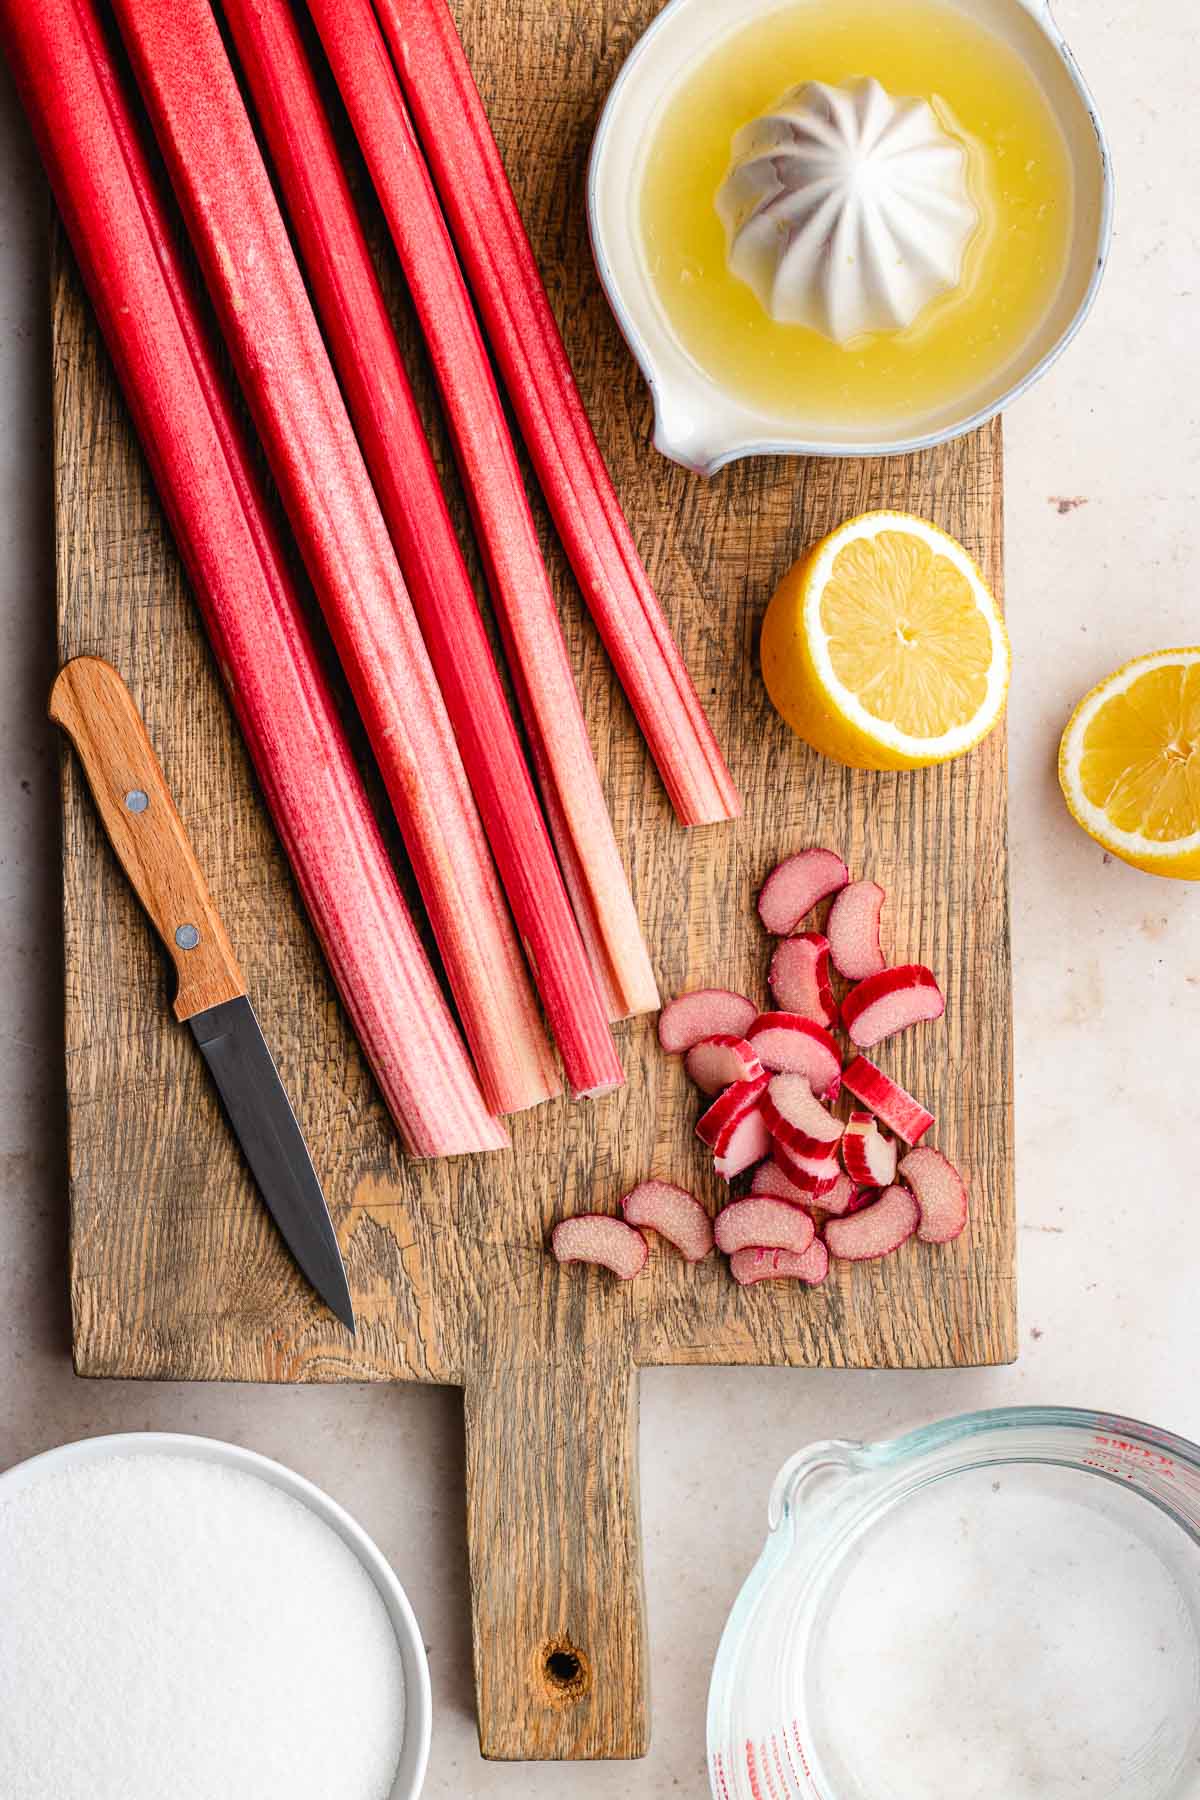 Rhubarb Sauce ingredients on cutting board